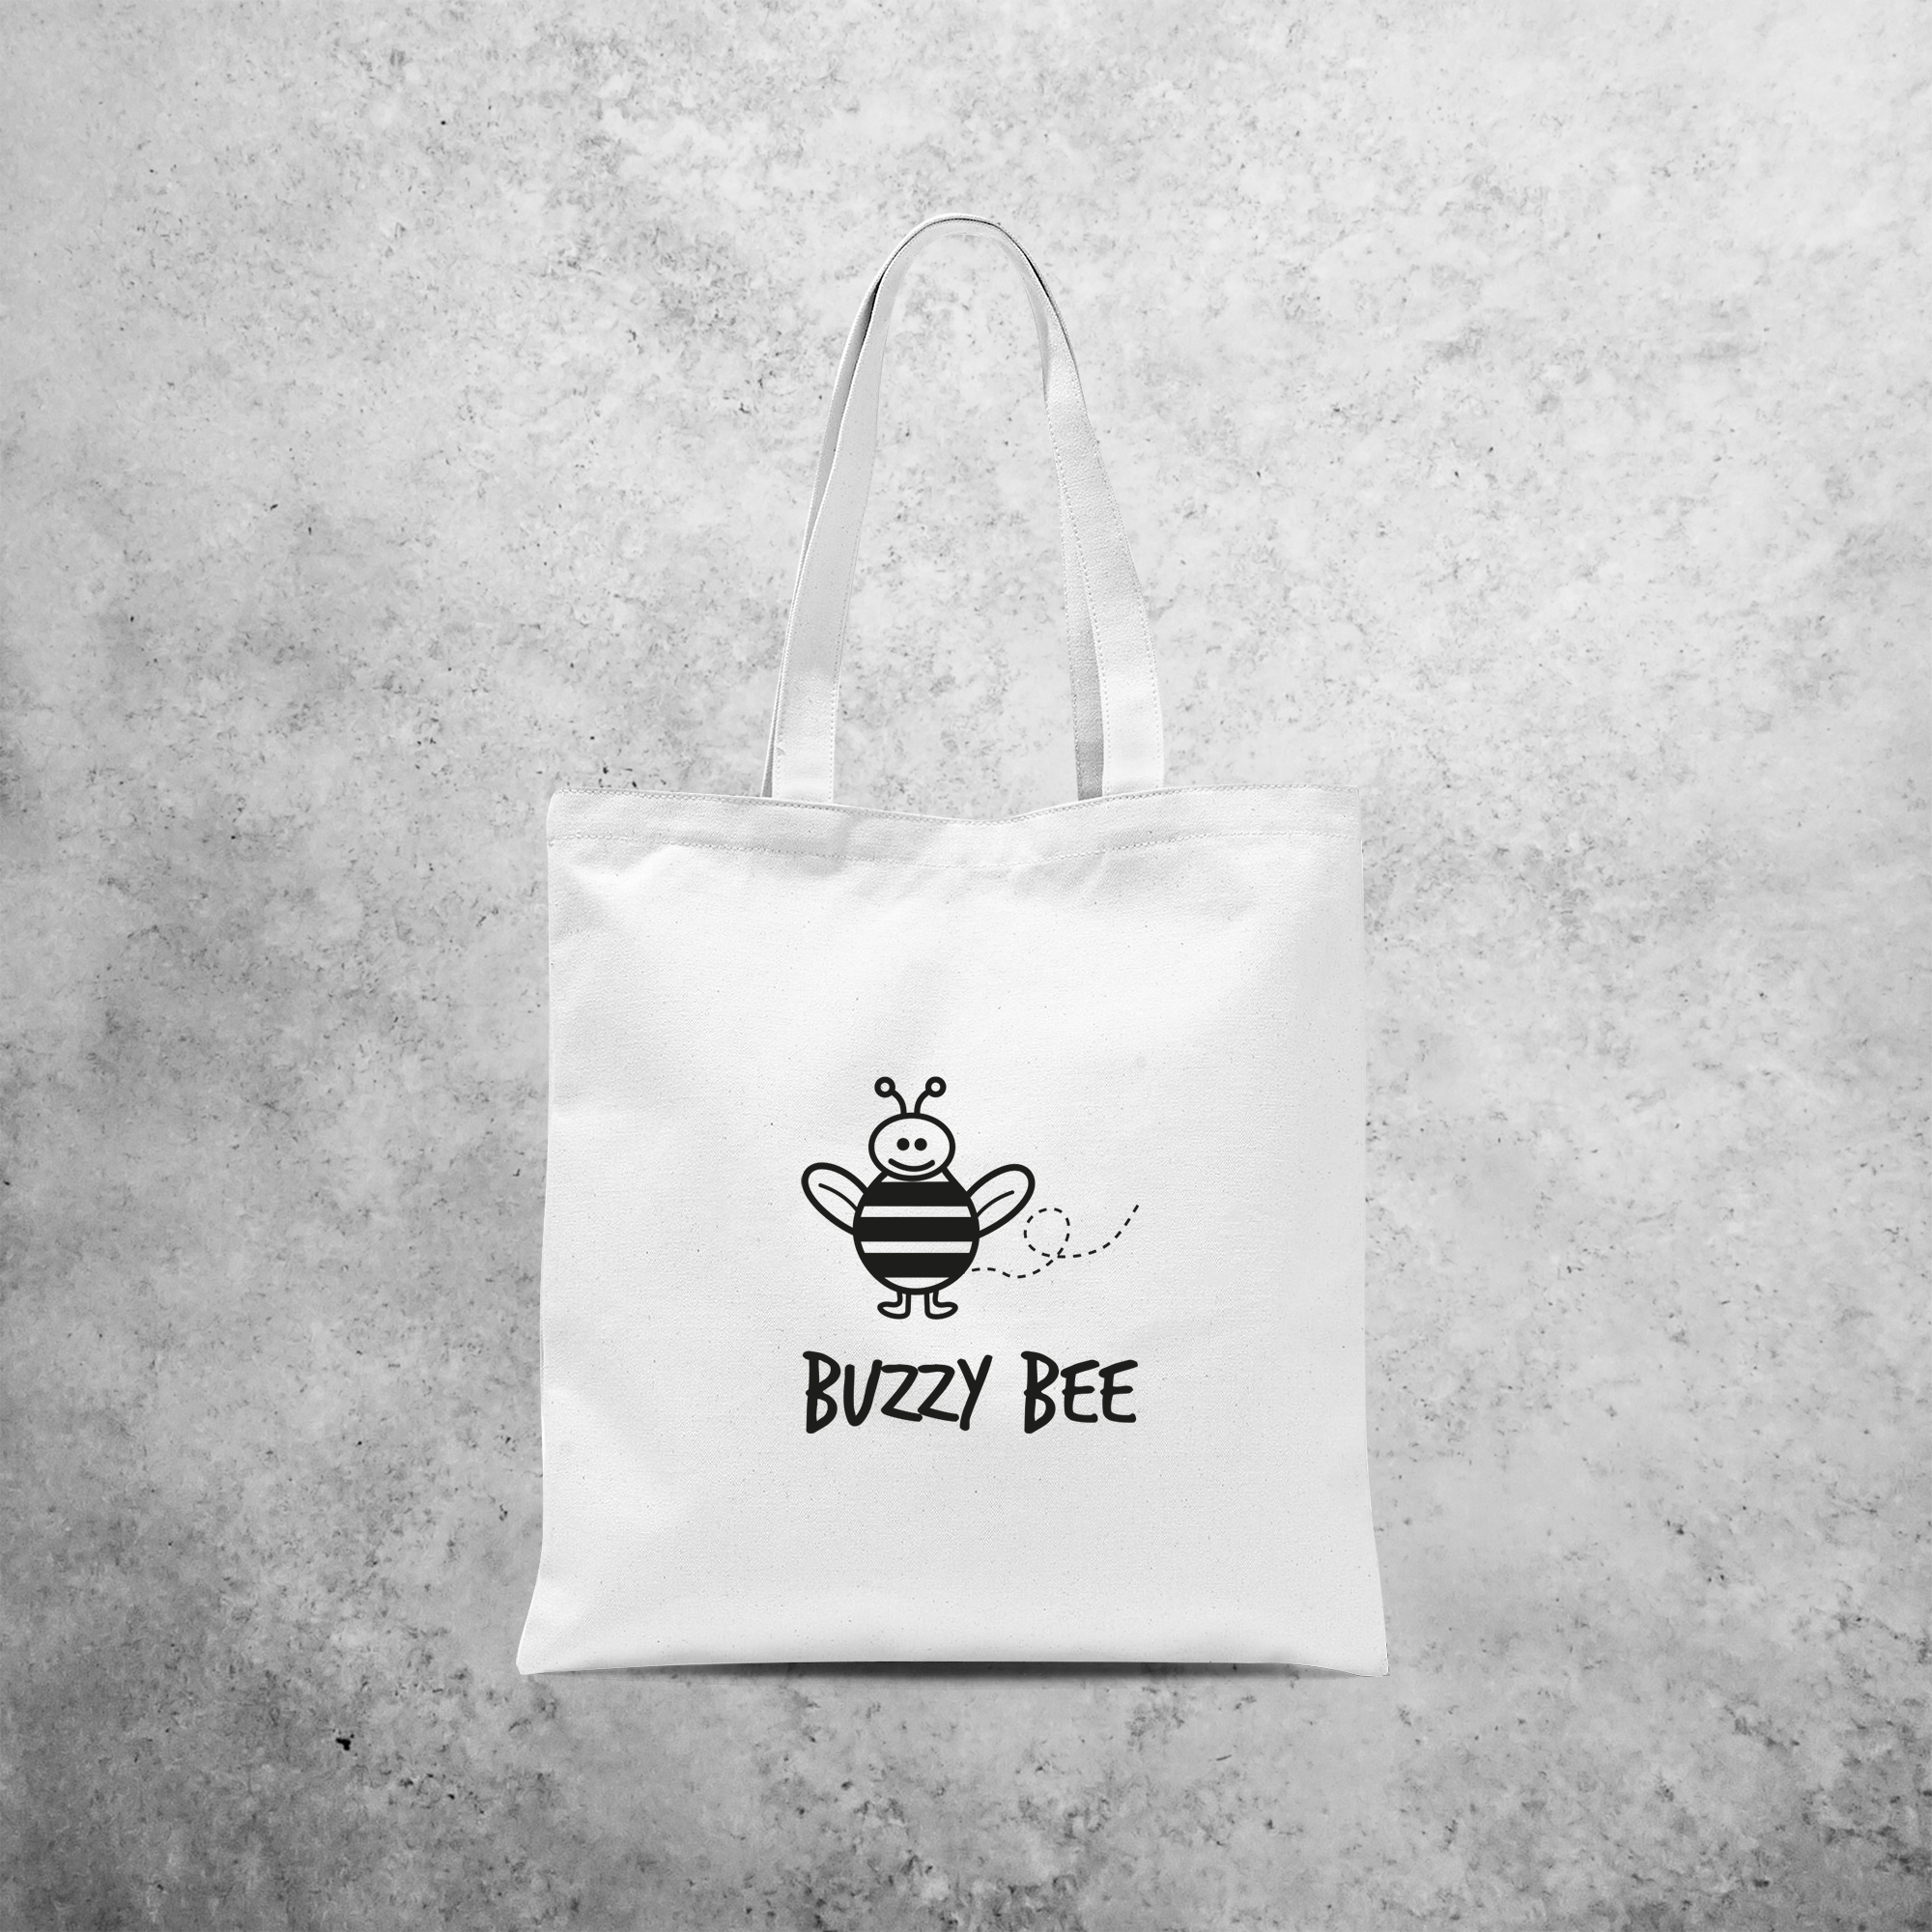 Buzzy bee tote bag